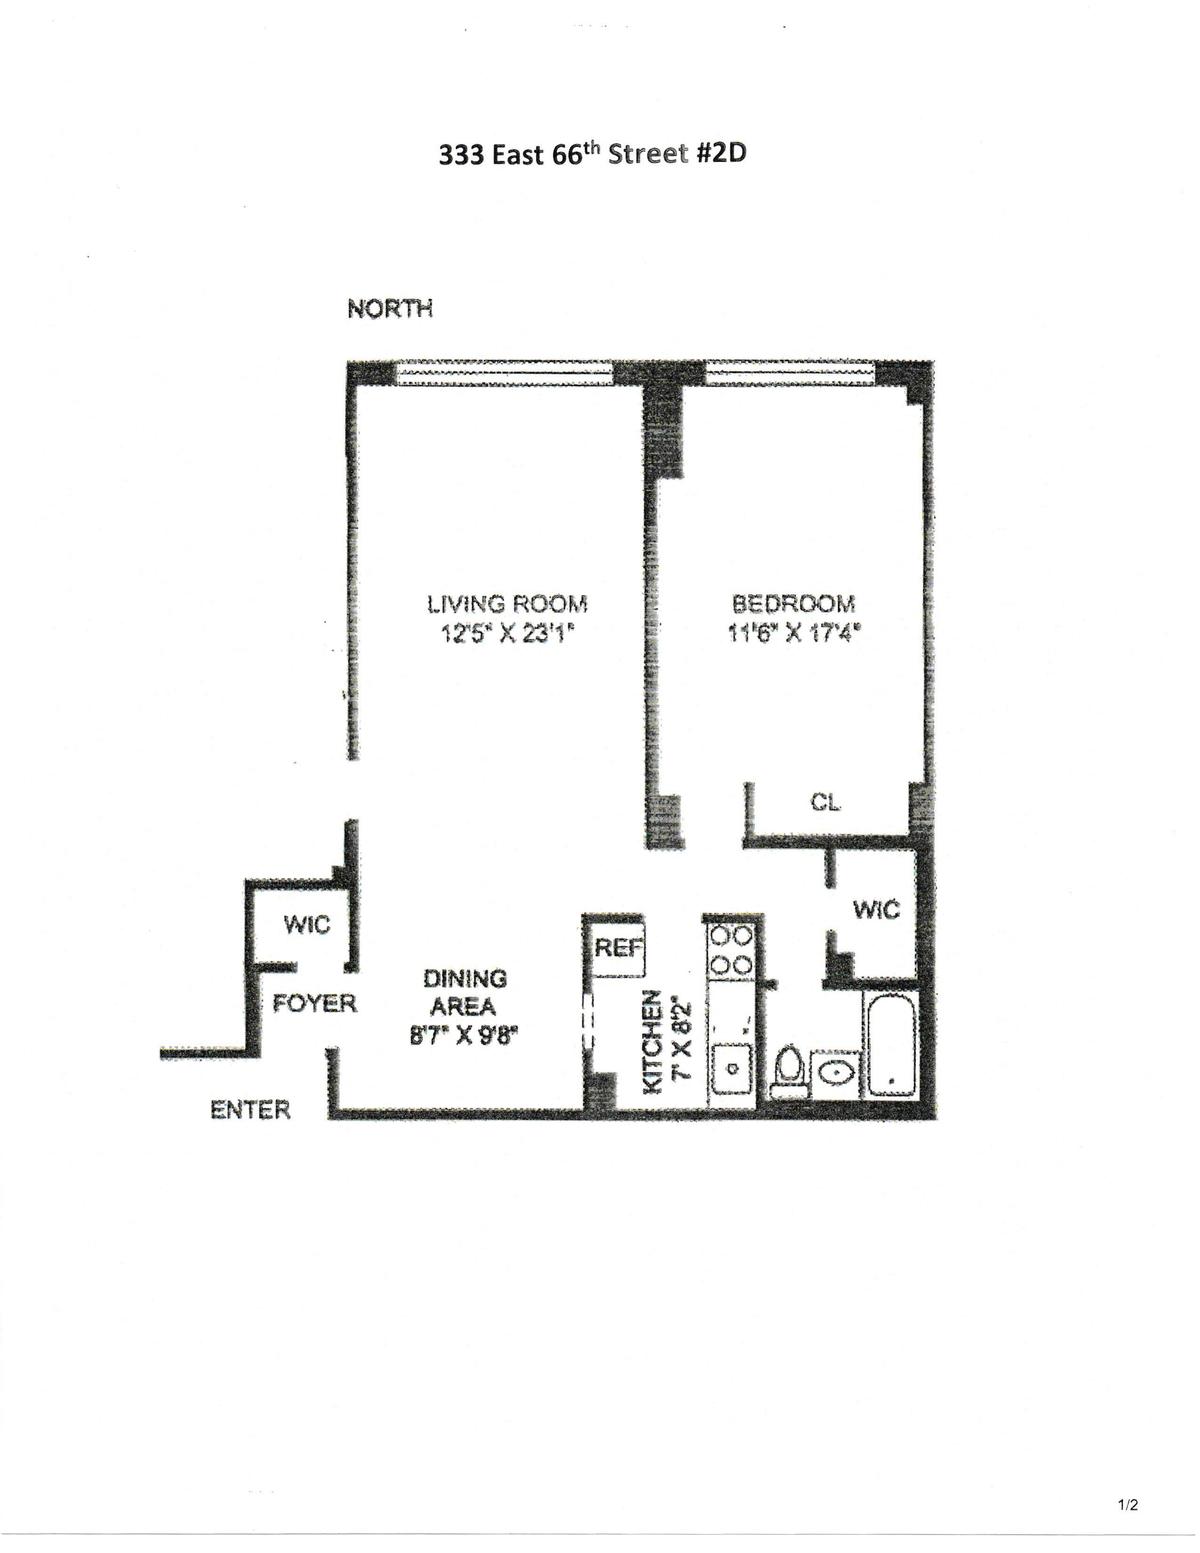 Floorplan for 333 East 66th Street, 2D